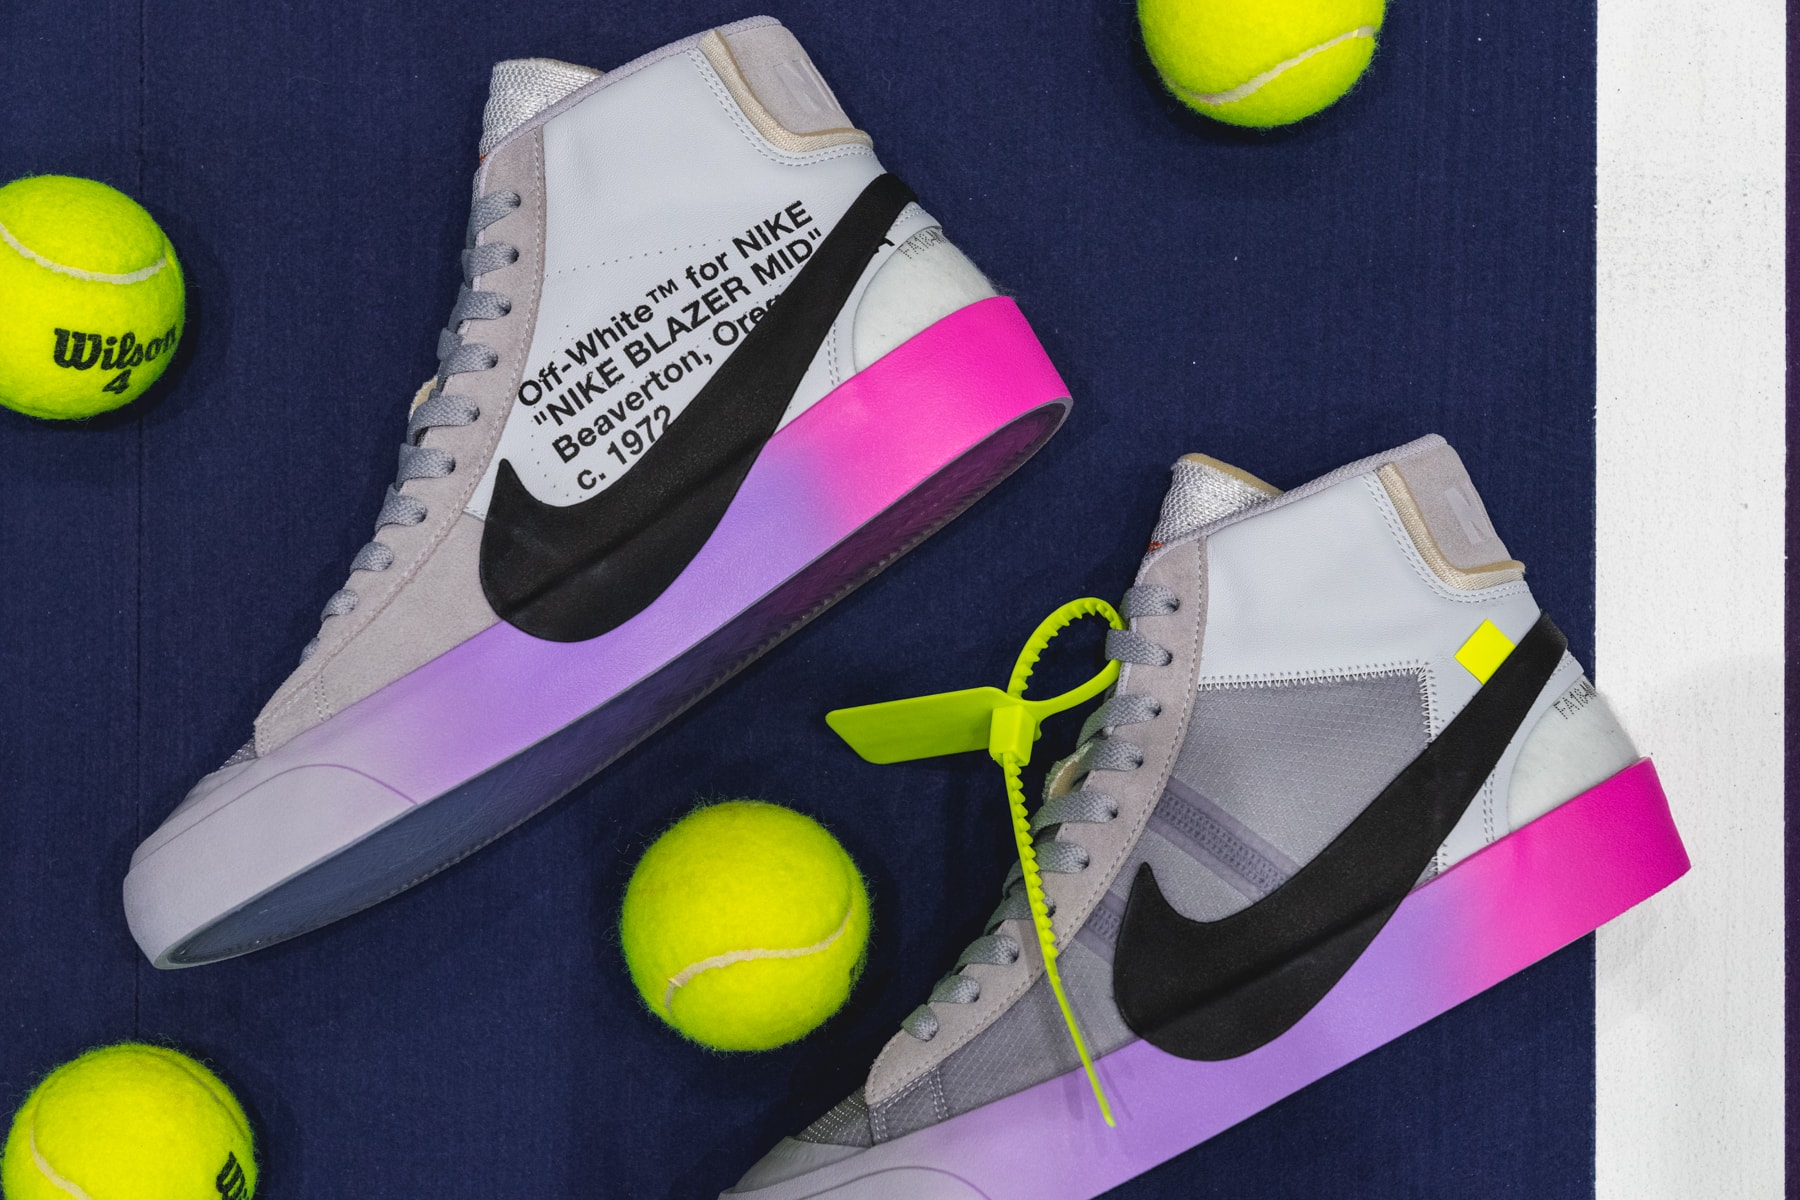 近賞 Serena Williams x Off-White™ x Nike 三方聯乘鞋履系列